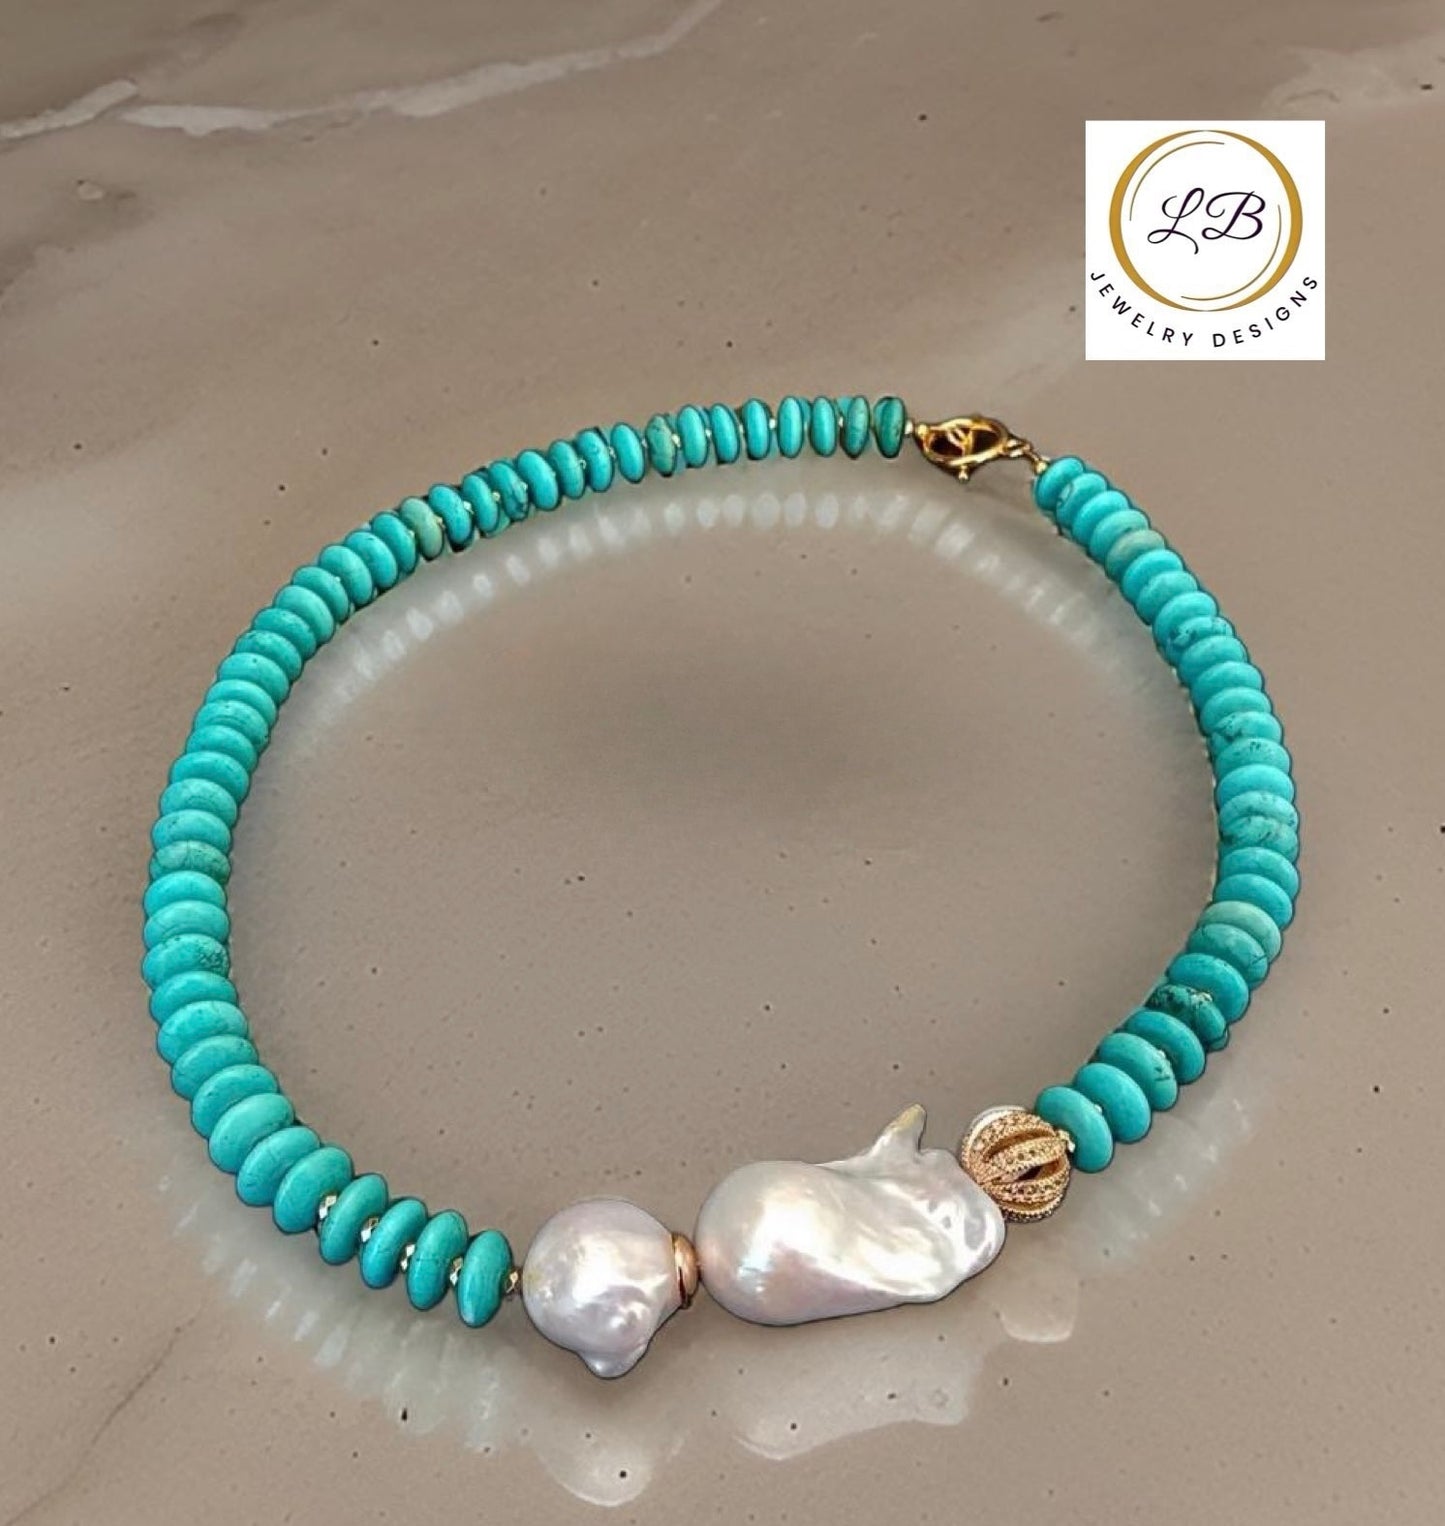 Stylish Turquoise and White Freshwater Keshi Pearl Gold Statement Necklace 20"